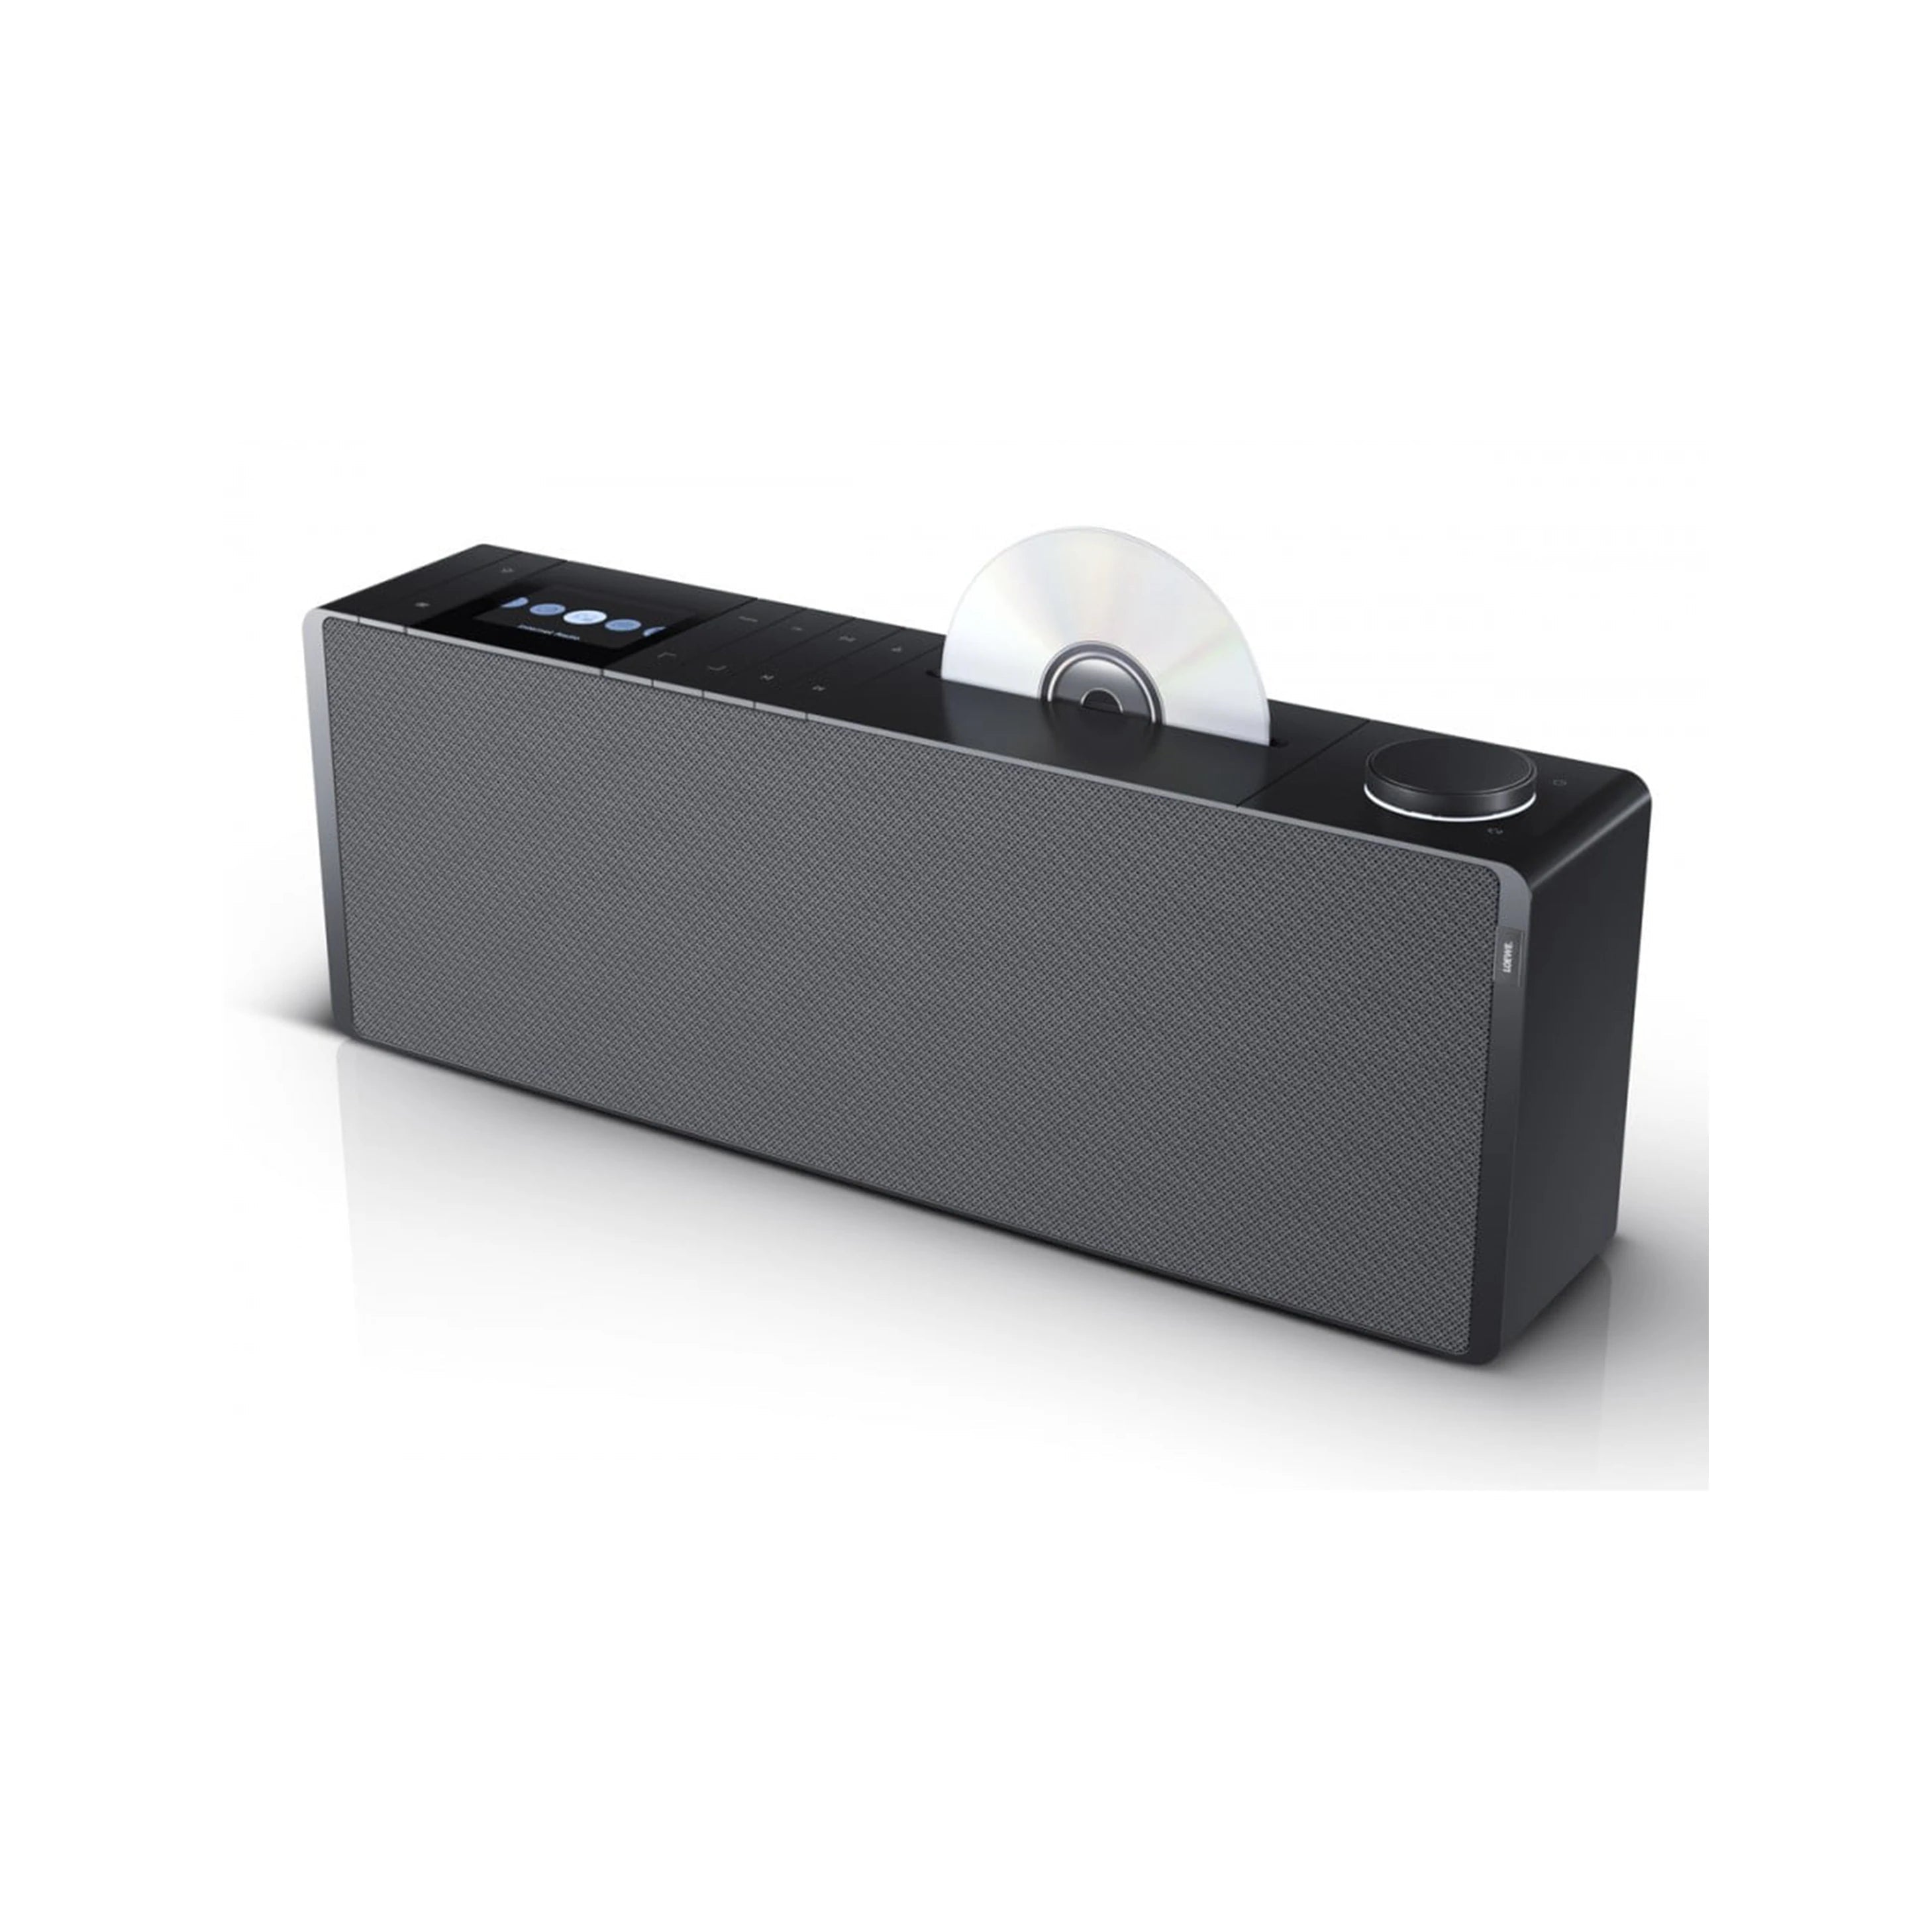 Loewe - Klang S3 - Wireless Bluetooth Speaker With Inbuilt CD Player Australia